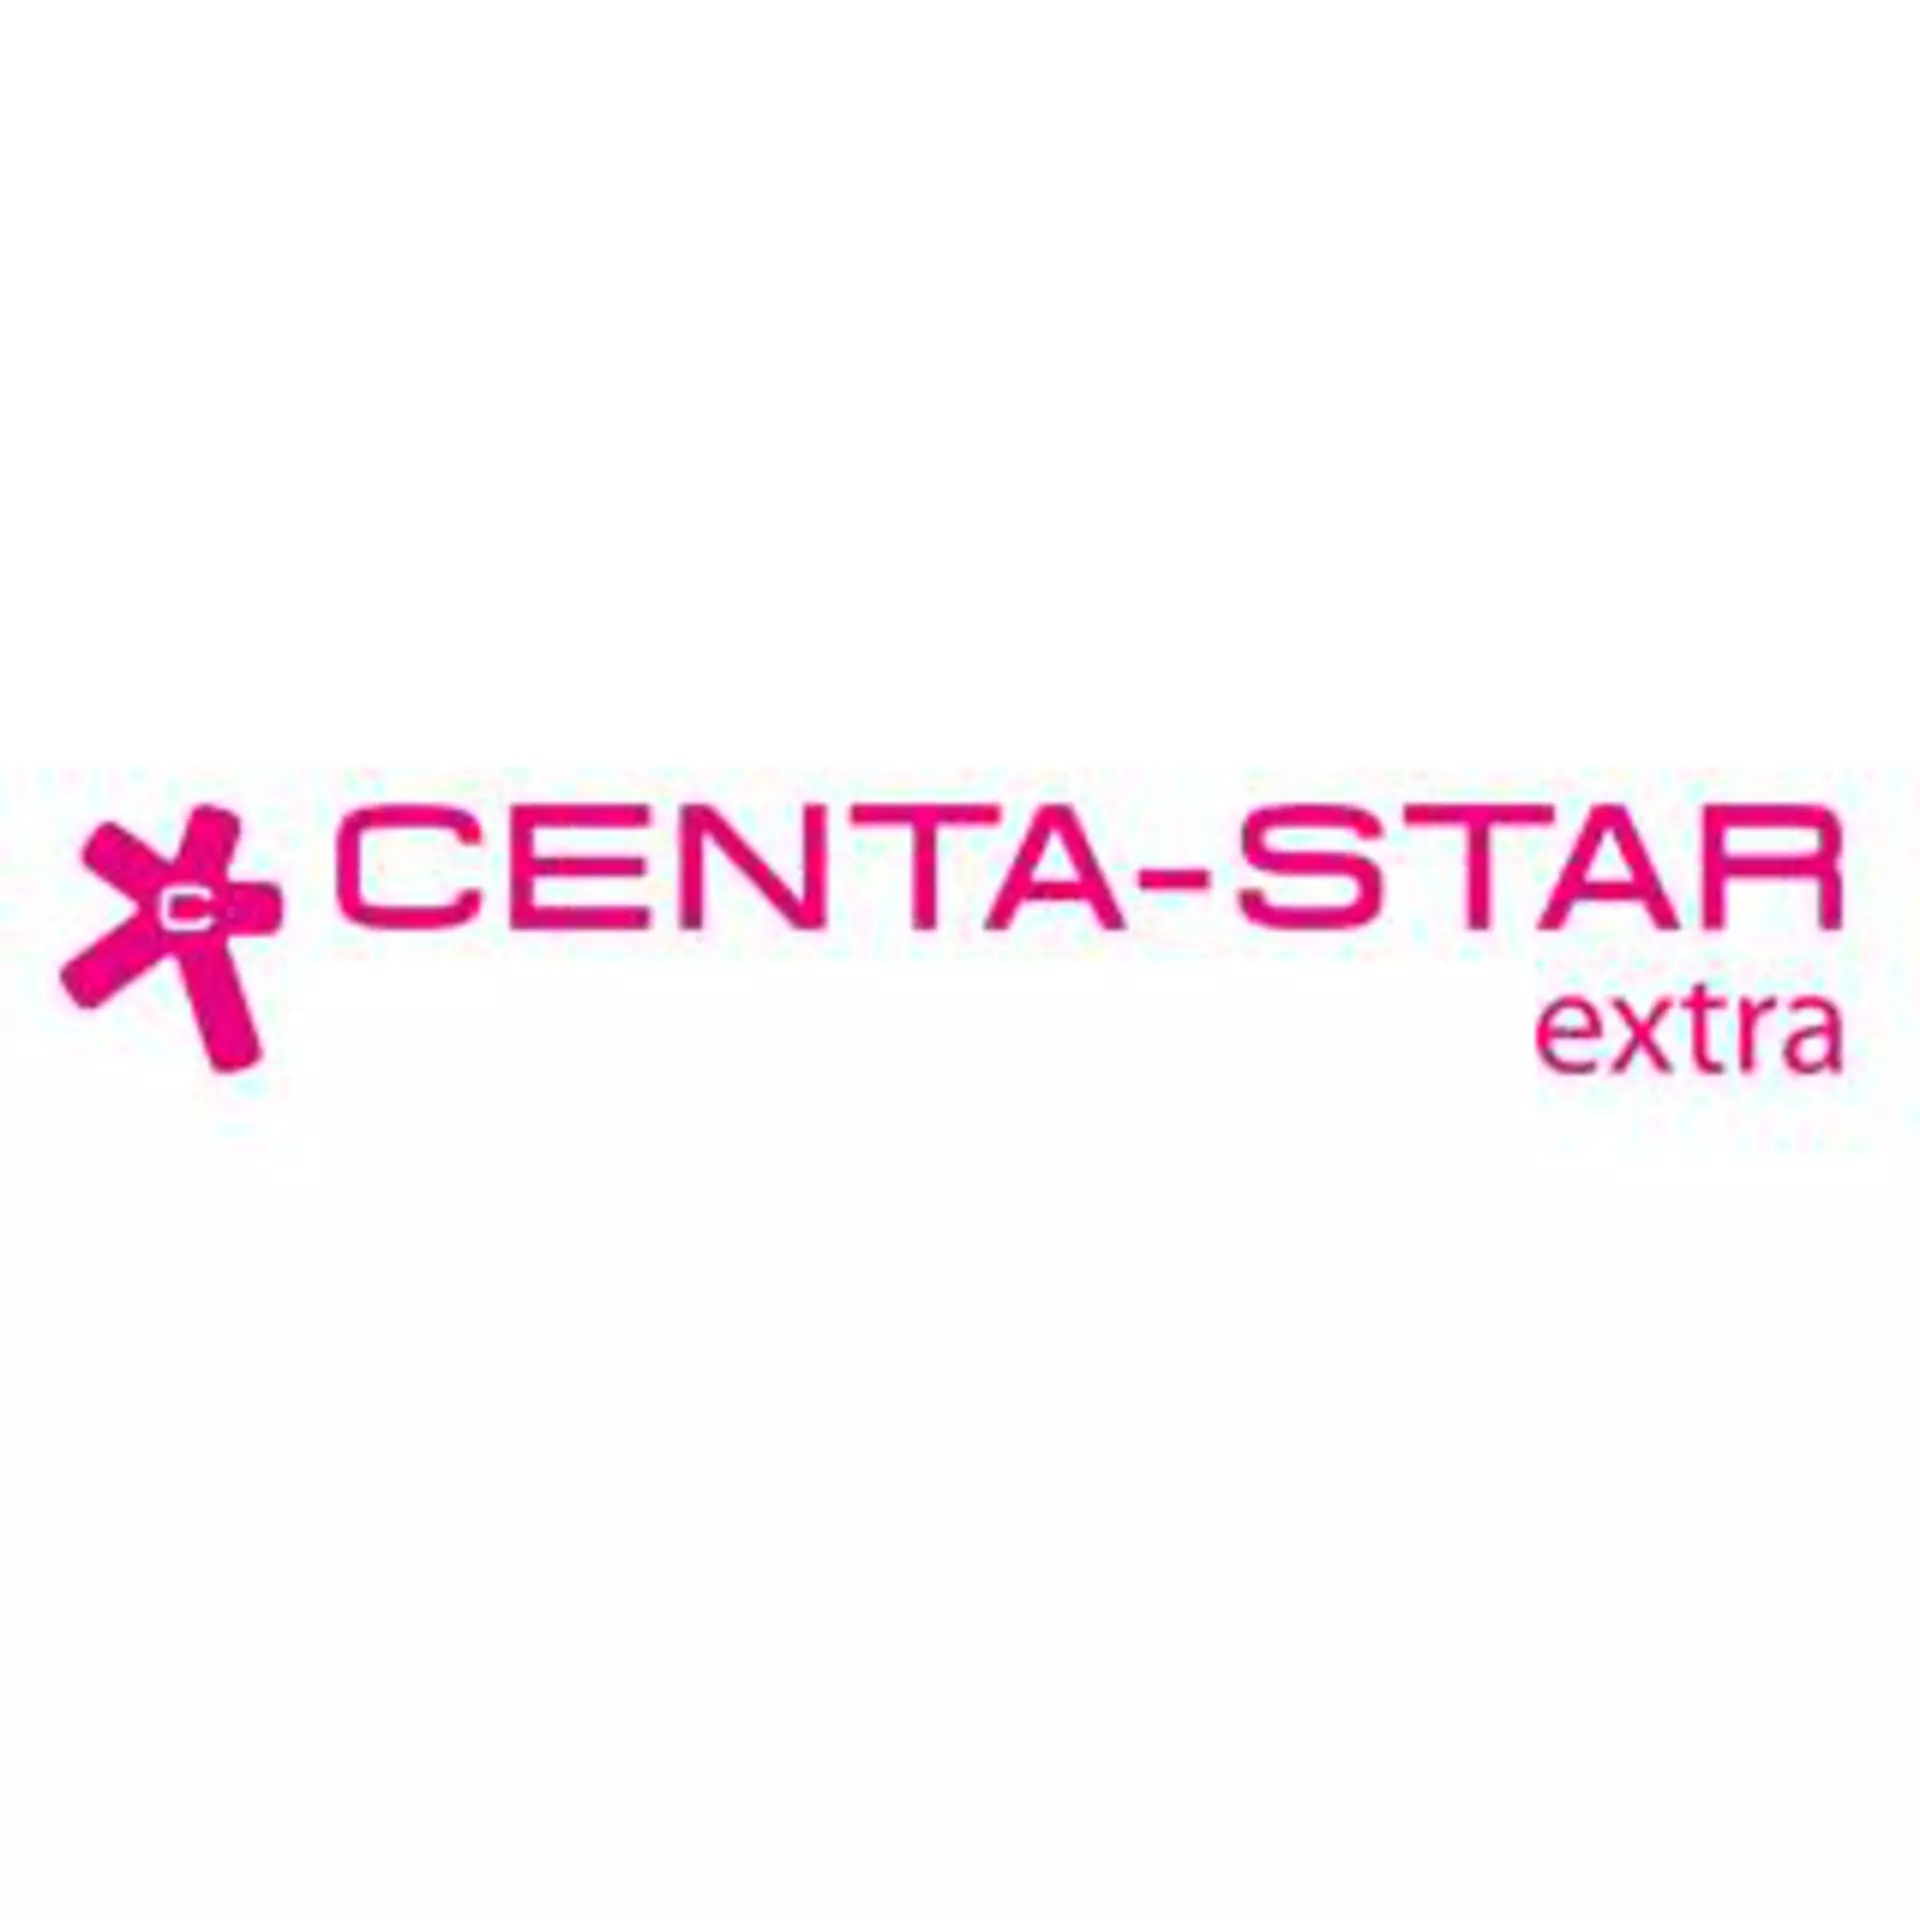 Centa-Star extra